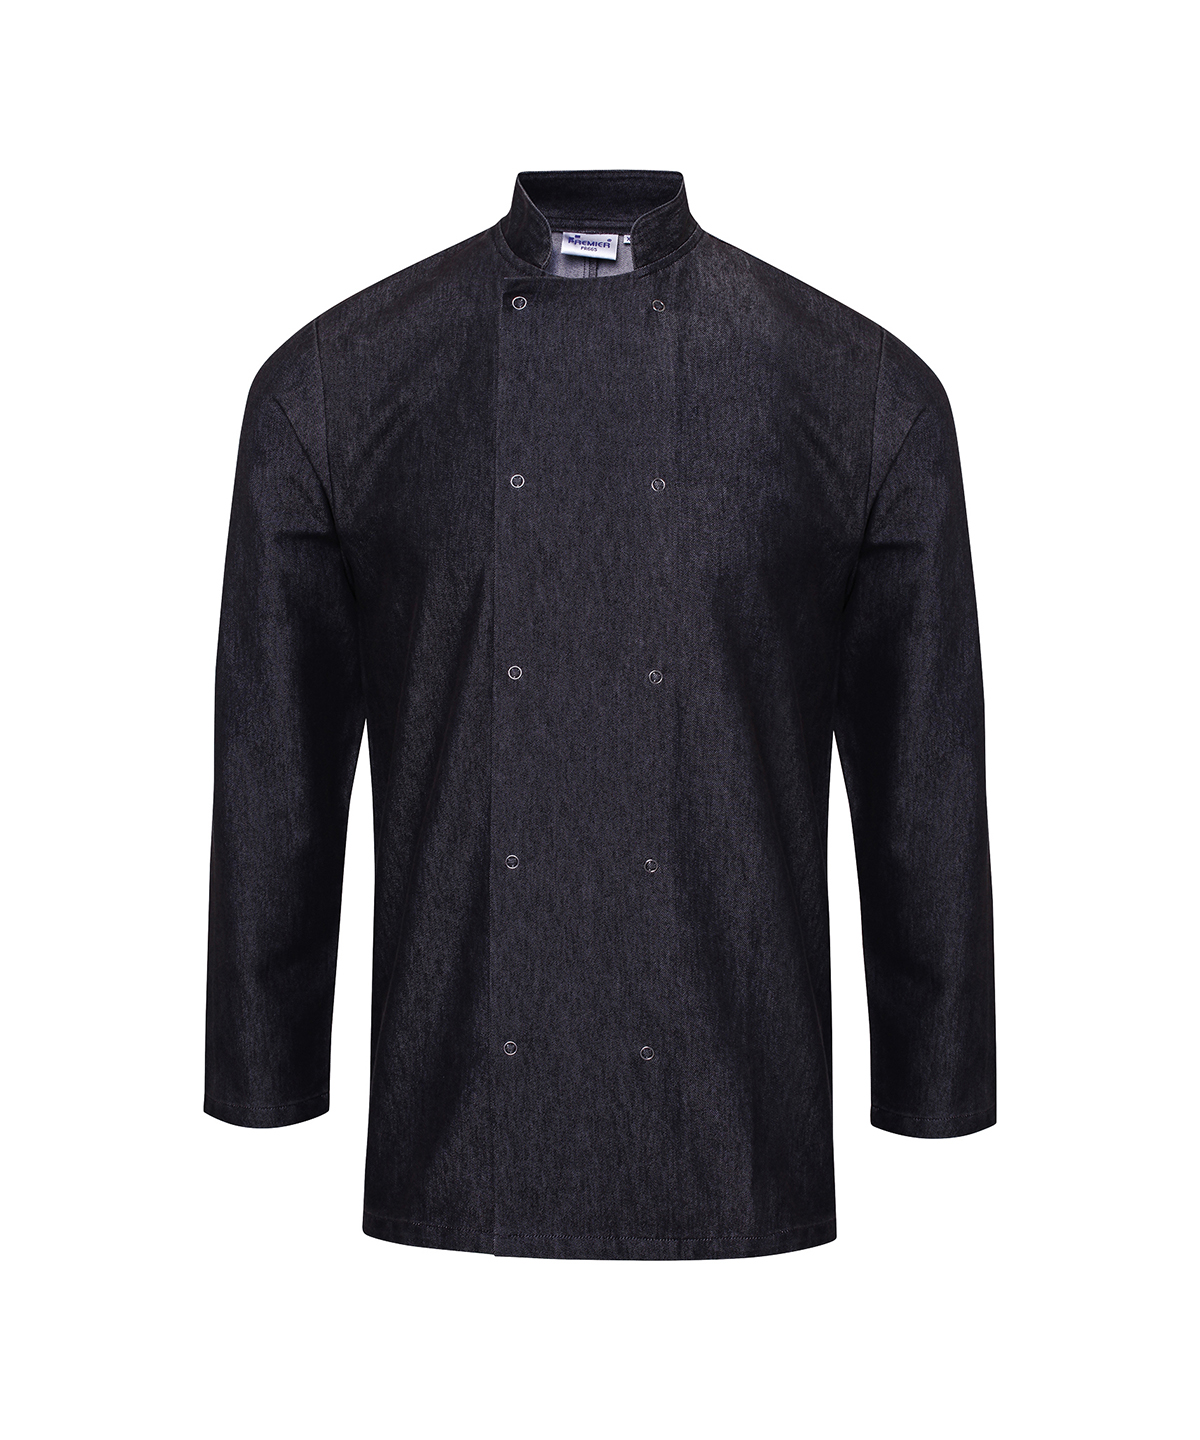 denim chef jackets-united workwear-pr660-black